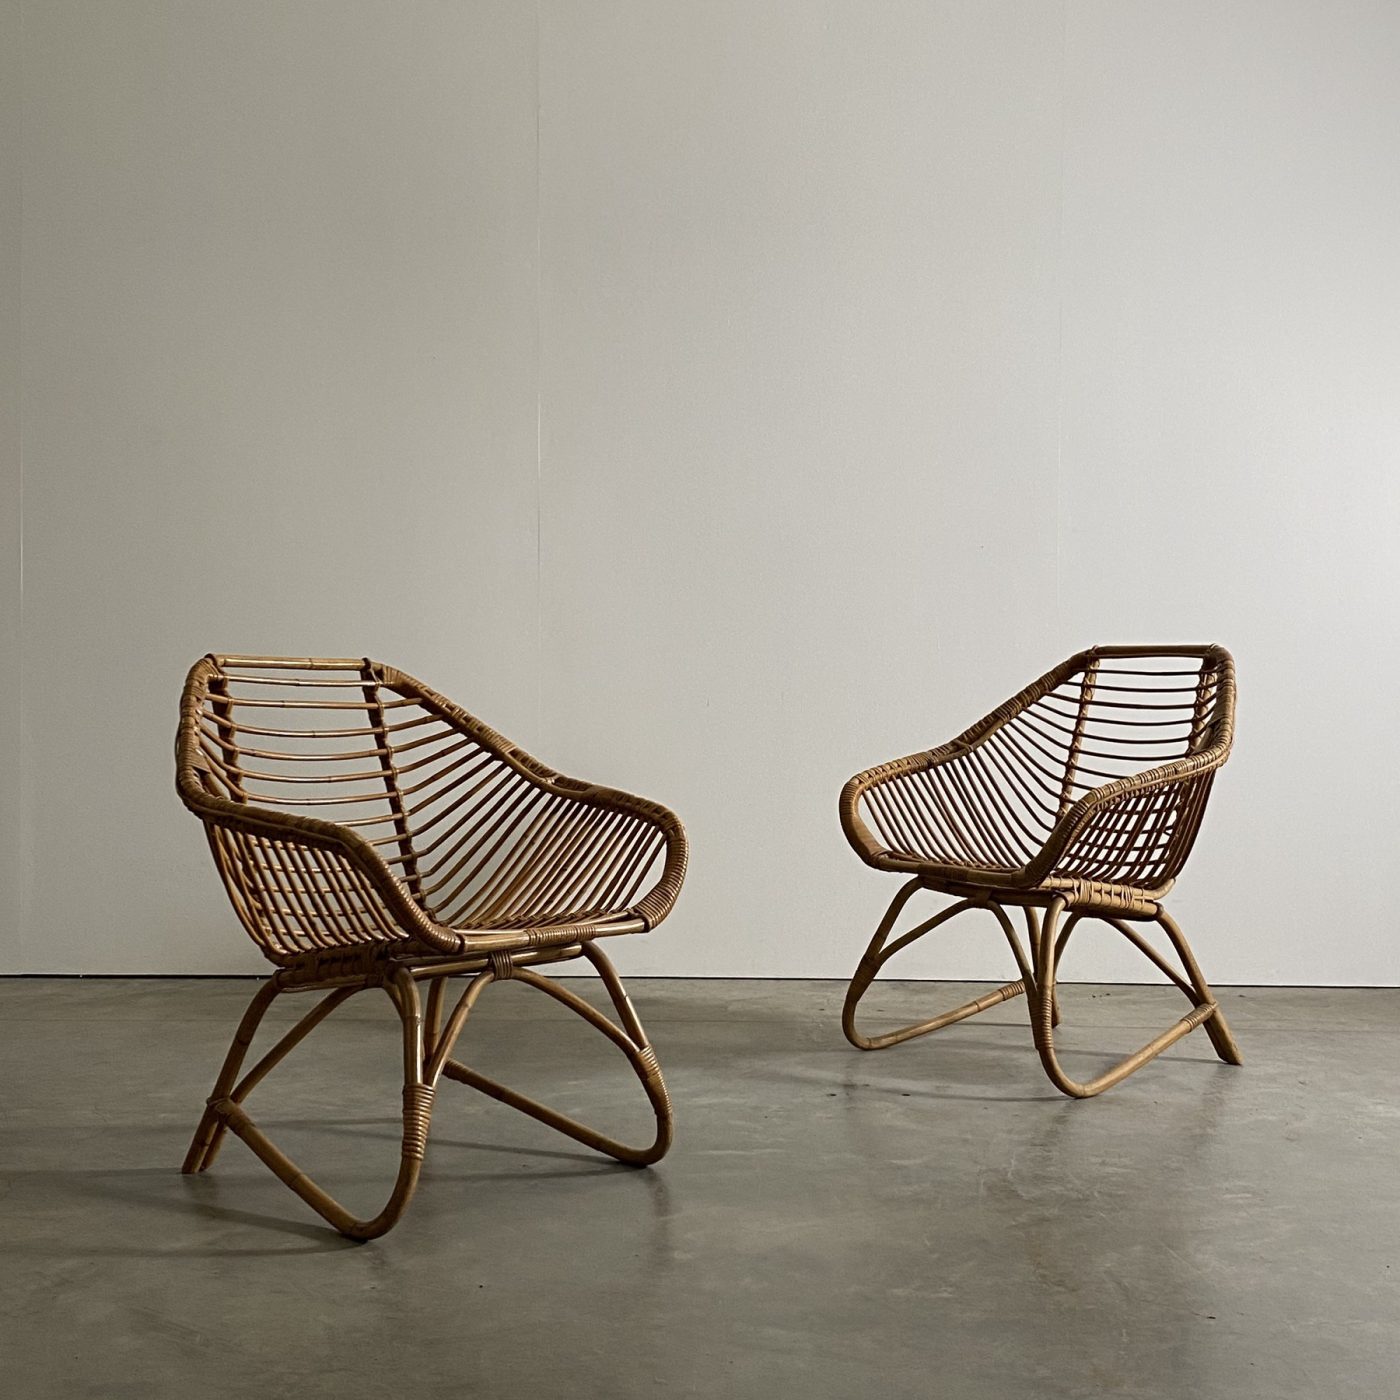 objet-vagabond-rattan-chairs0004